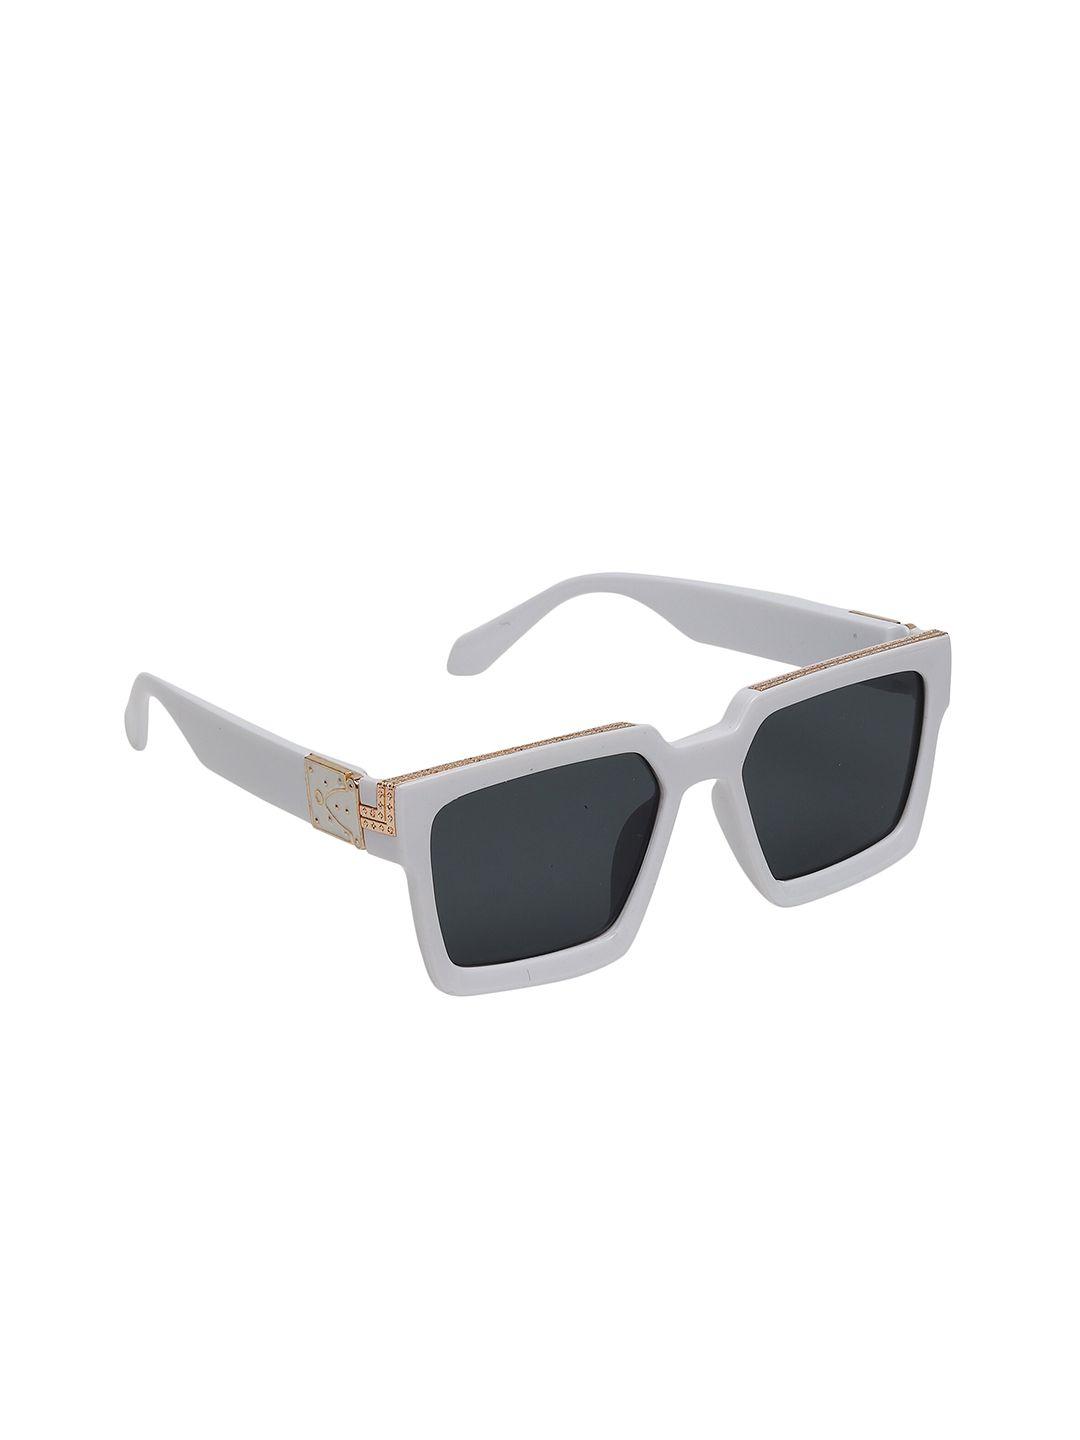 celebrity sunglasses unisex grey lens & white wayfarer sunglasses cl-eddy-jass-07